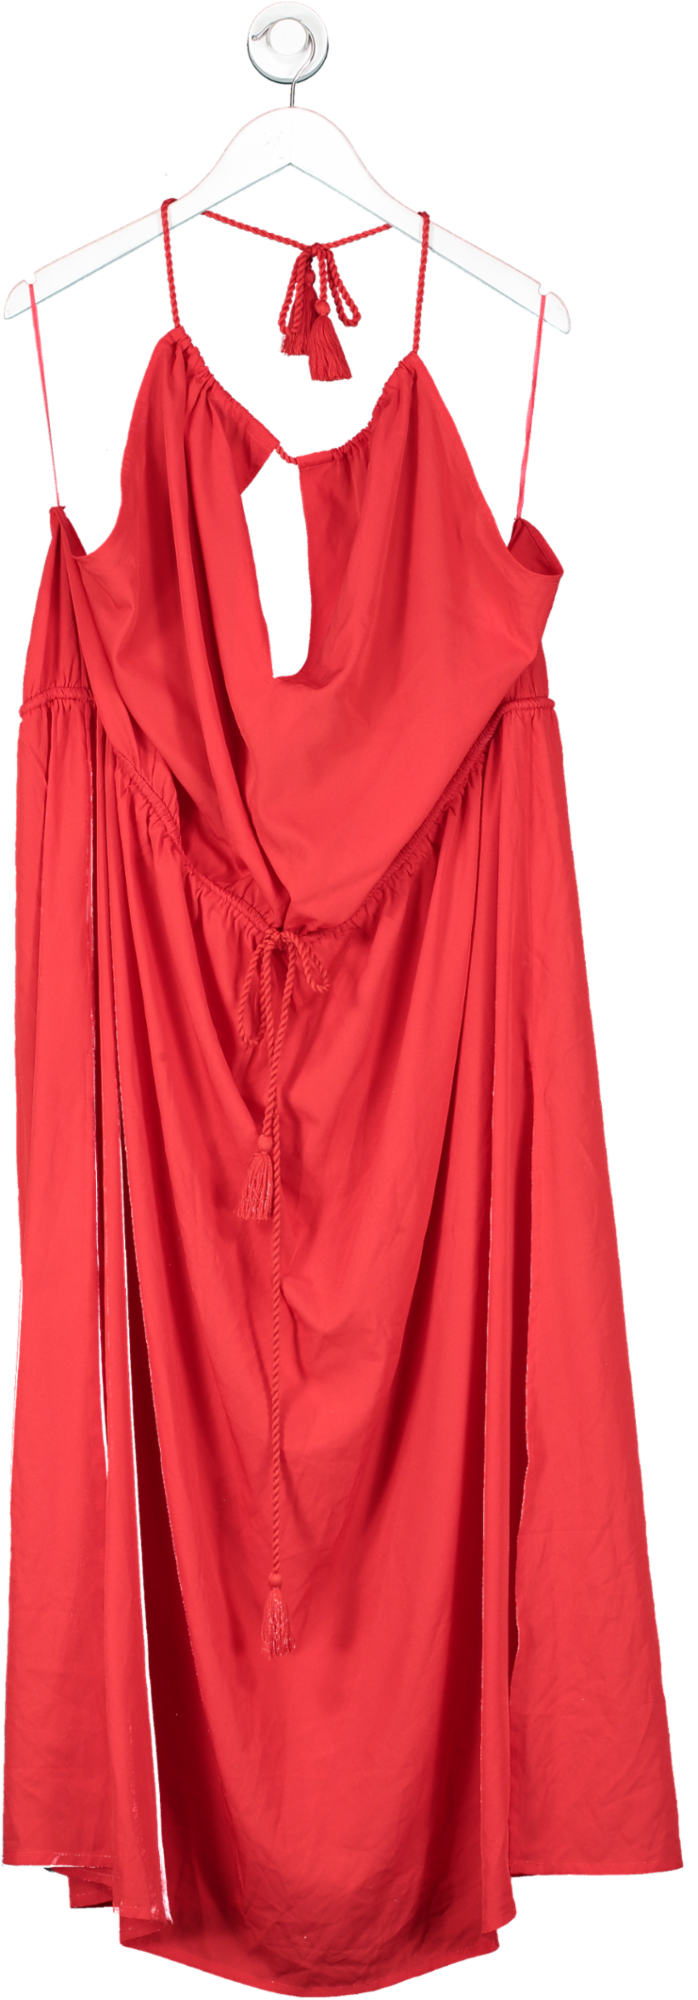 SimplyBe Red Halter Neck Tie Beach Dress UK 28